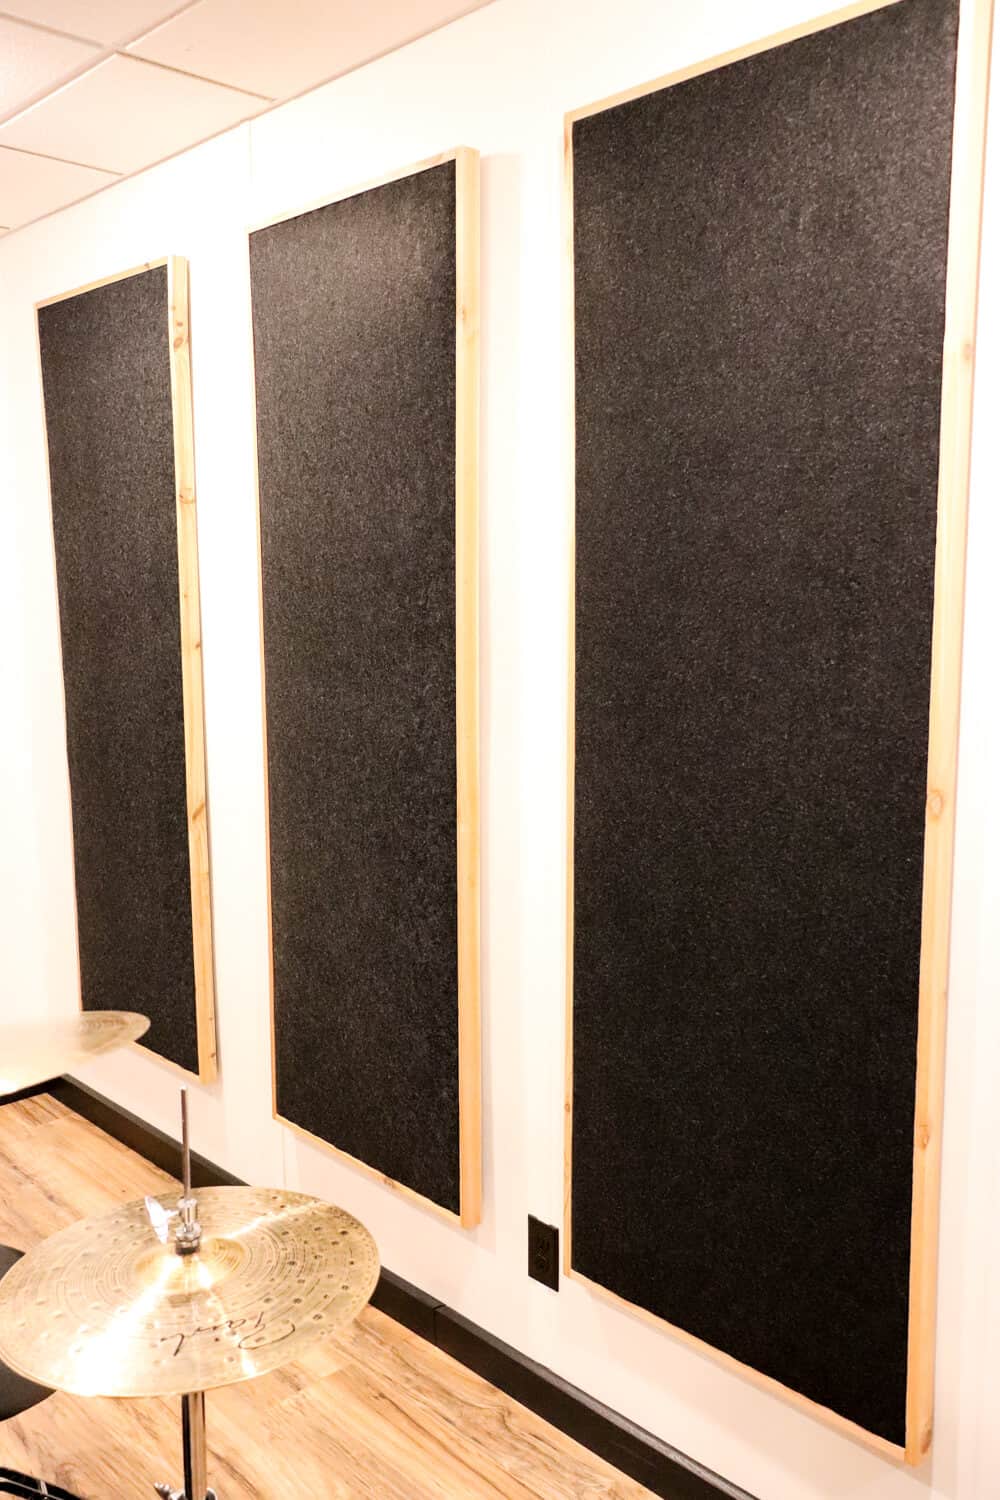 Sound panels made of cedar and felt